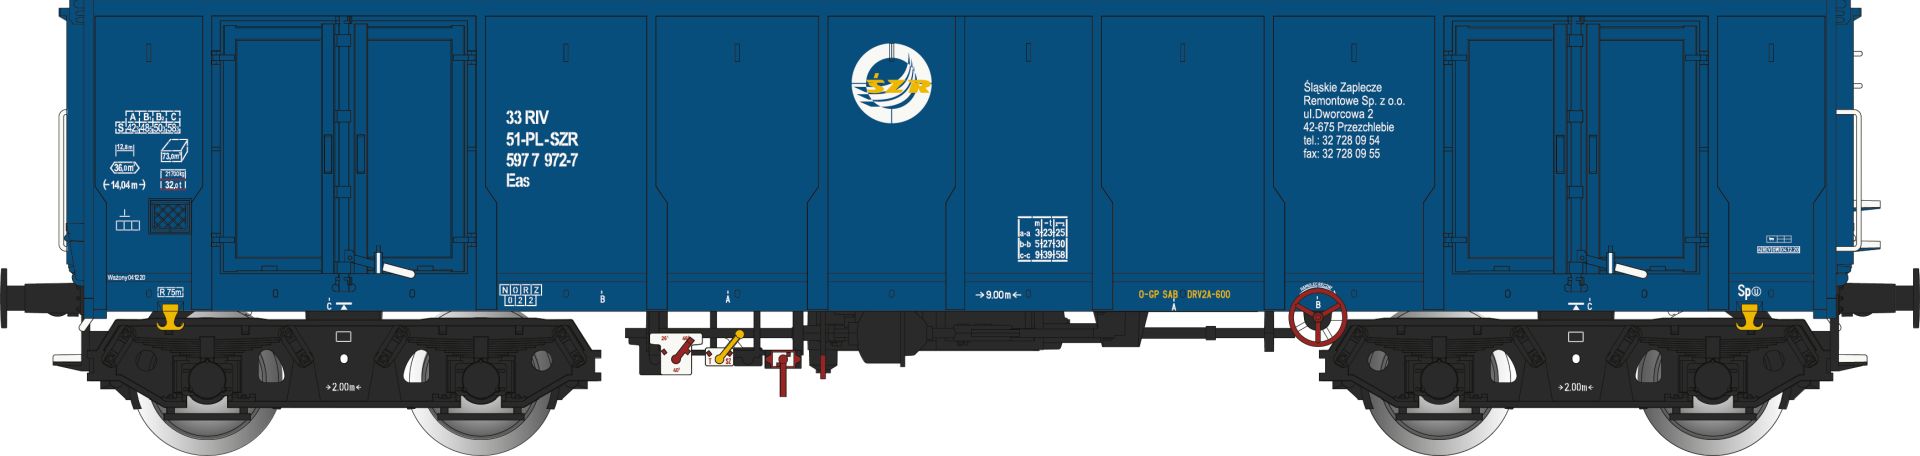 Albert Modell 597032 - Offener Güterwagen Eas, PL-SZR, Ep.VI